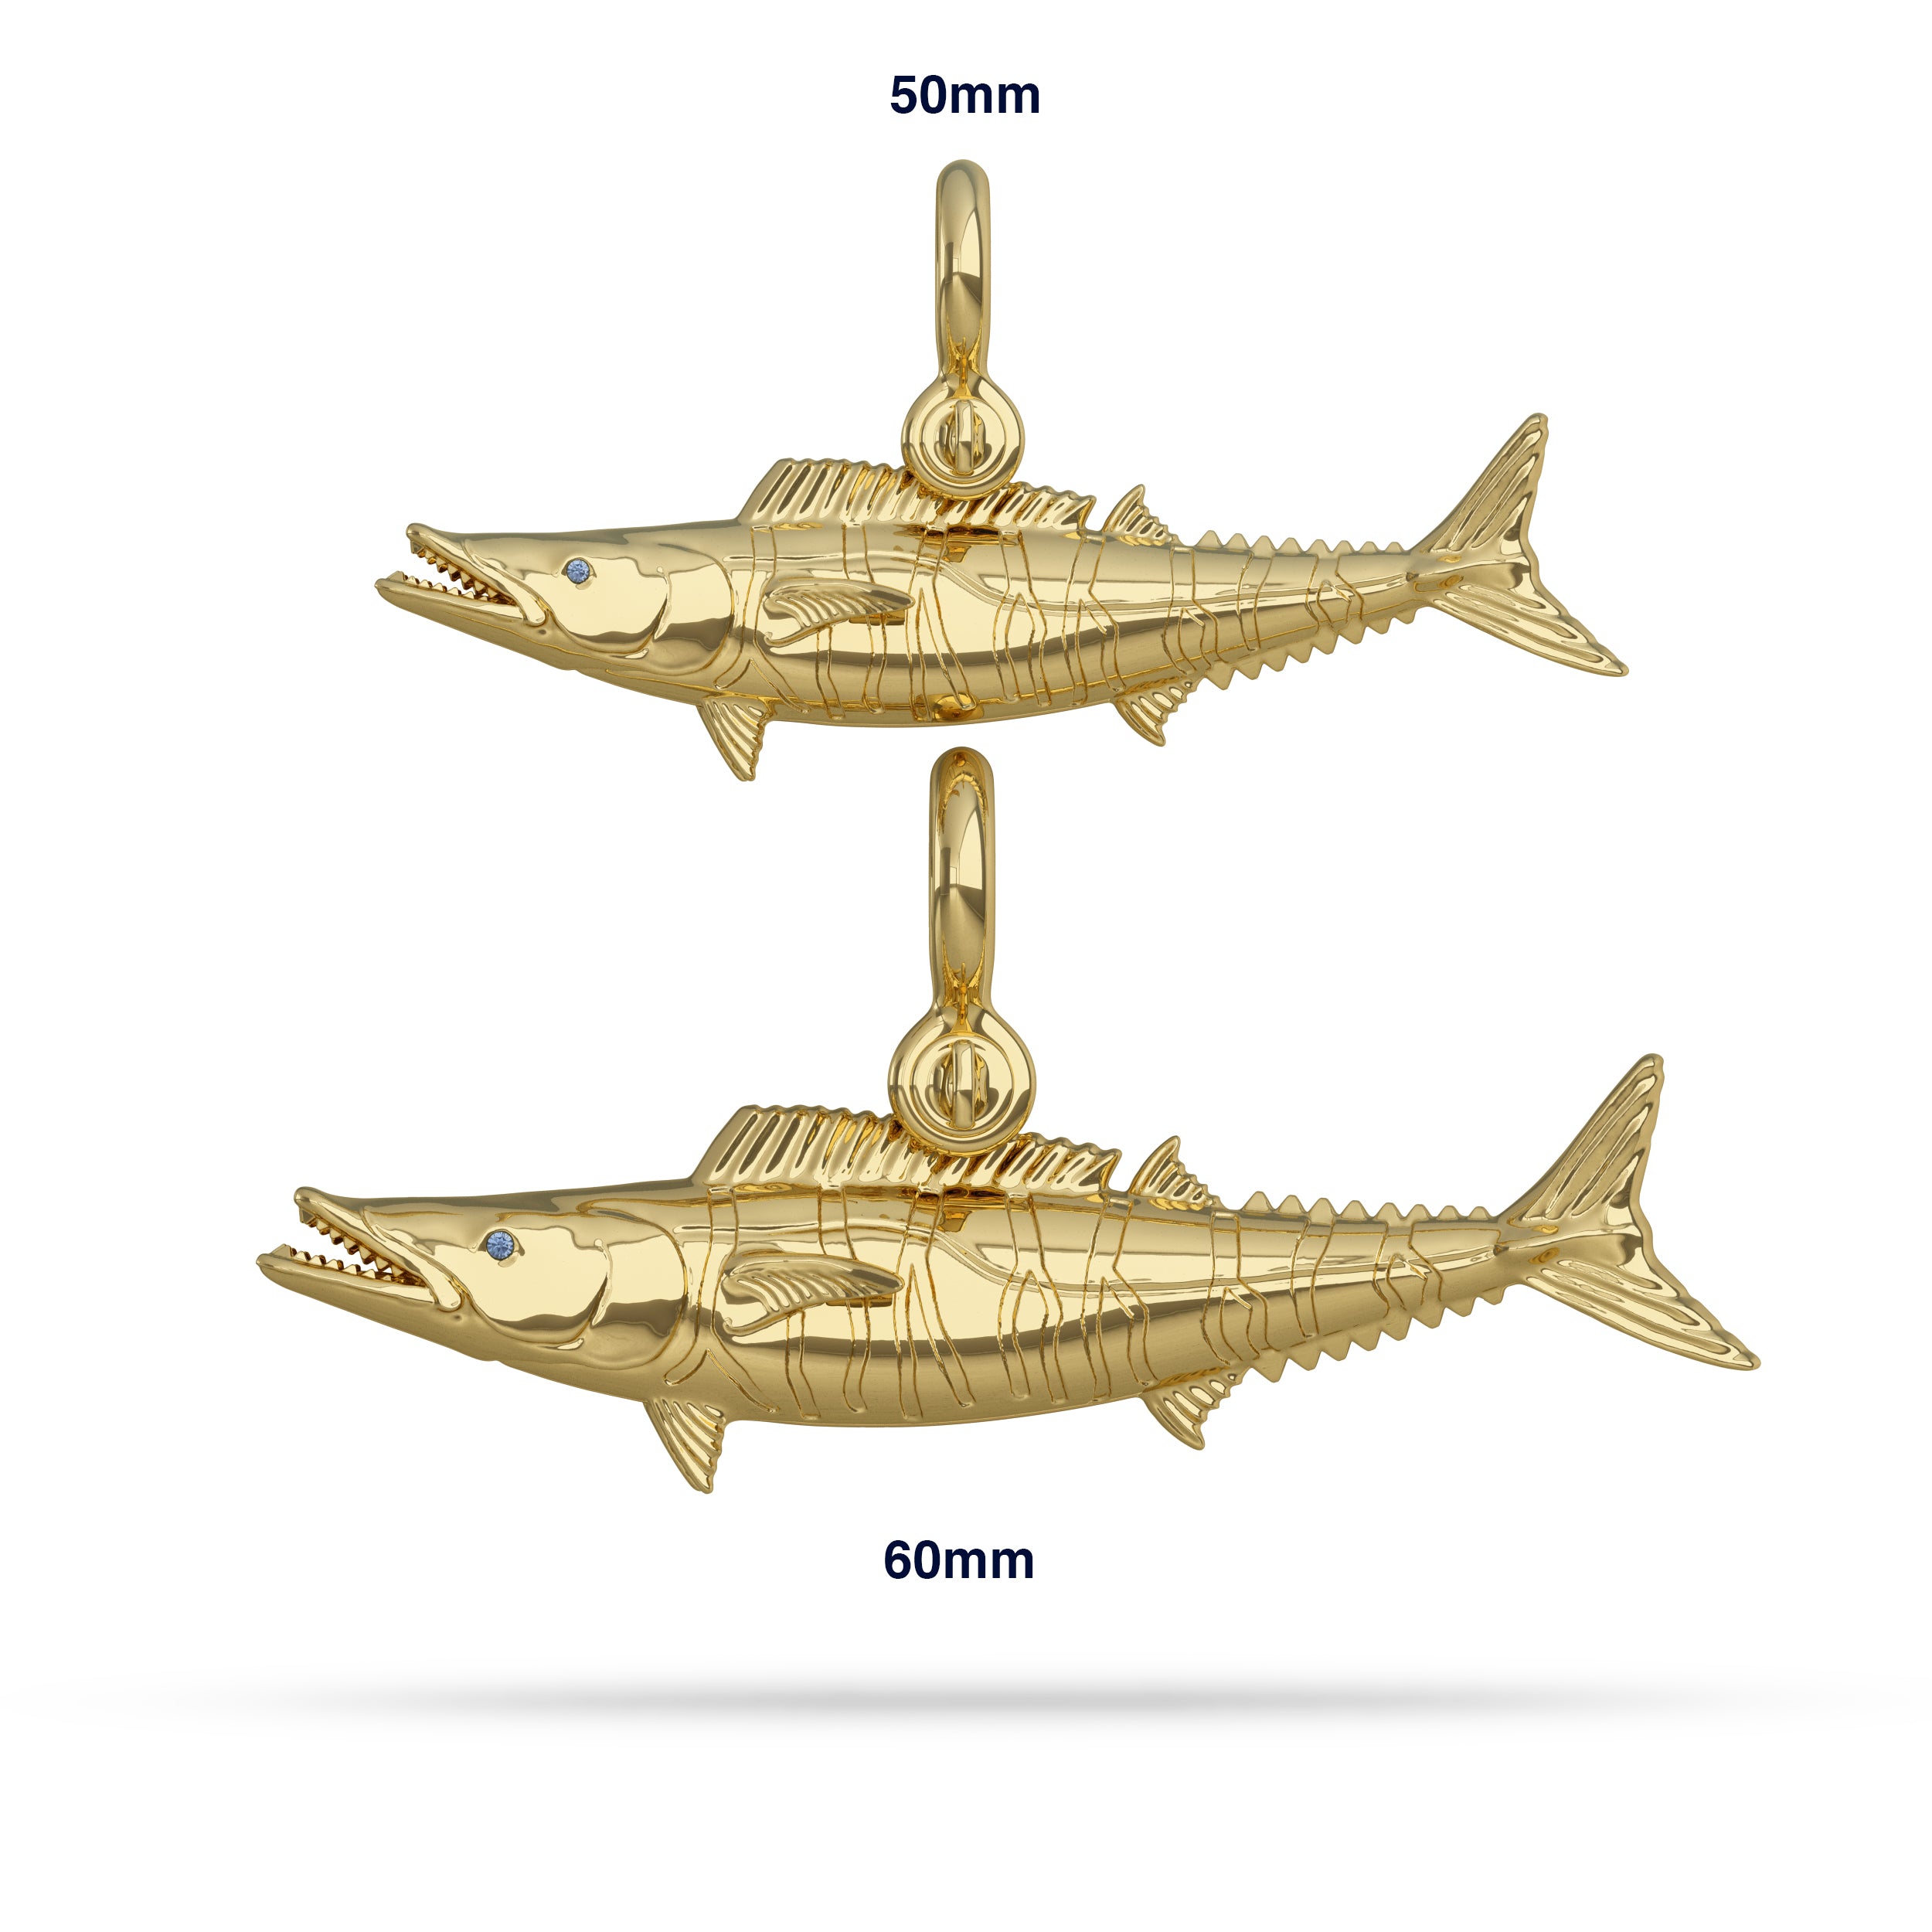 Solid 14k Gold Wahoo Fish Pendant Size Comparison